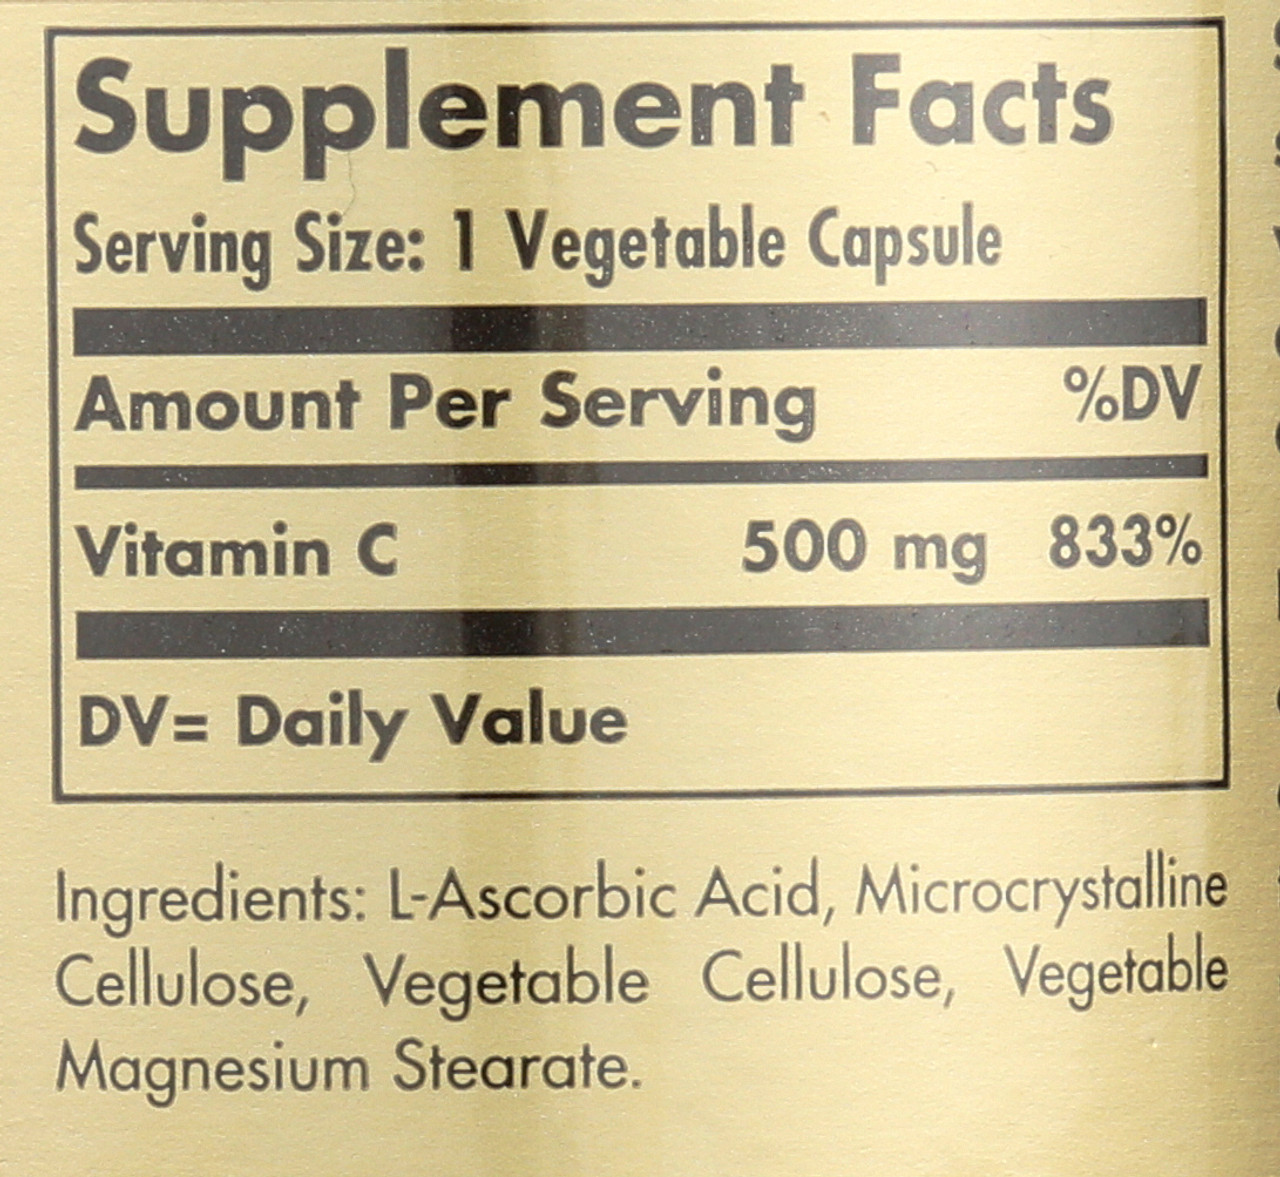 Vitamin C 500mg 100 Vegetable Capsules